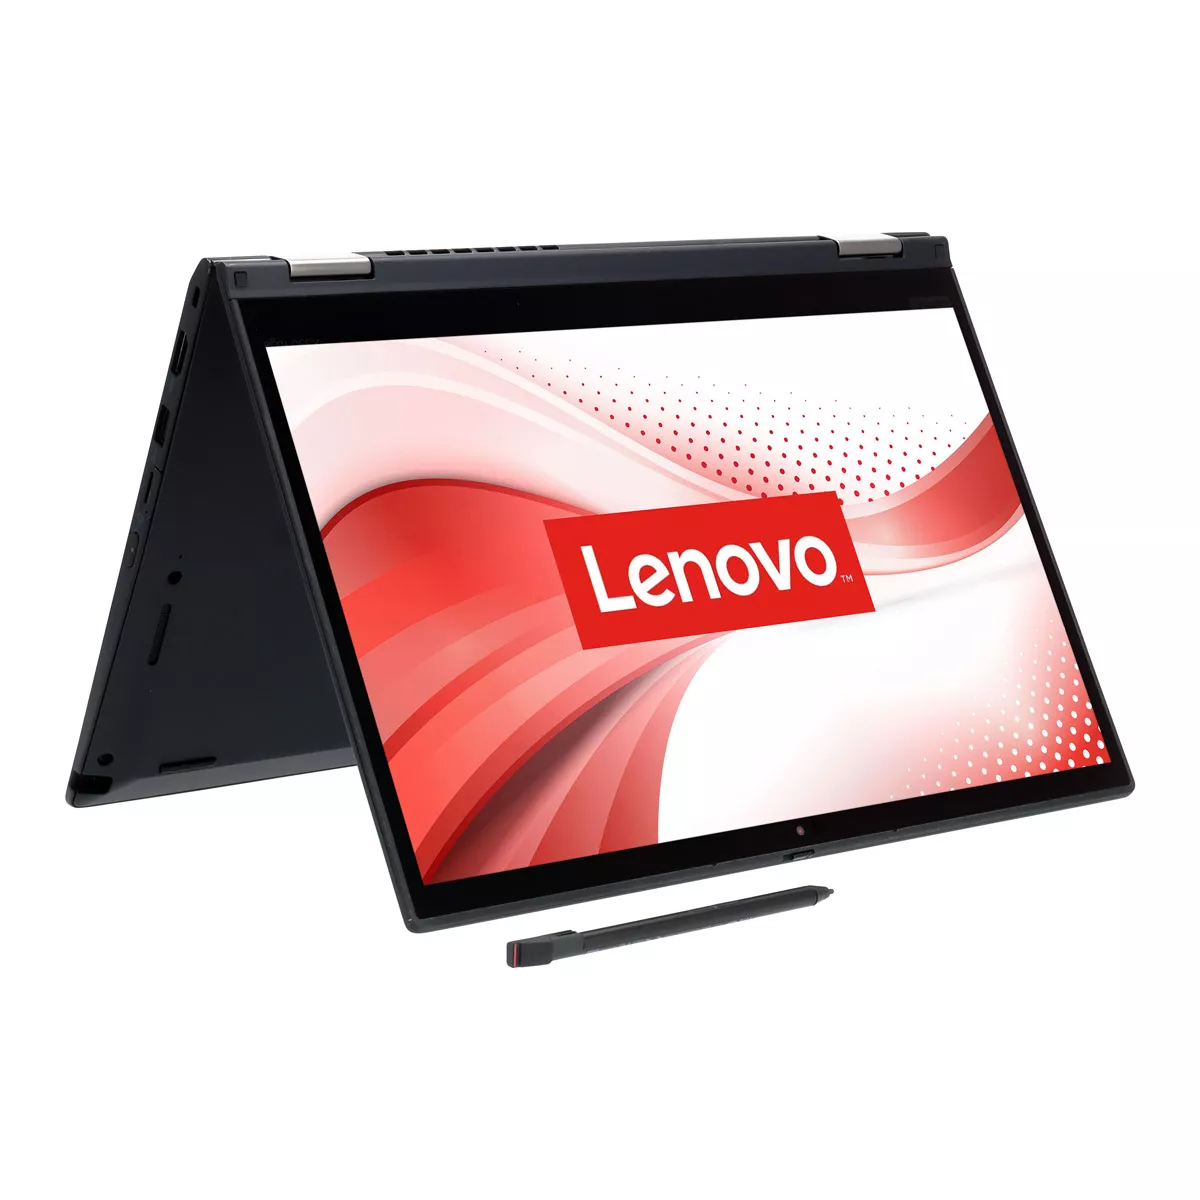 Lenovo ThinkPad X390 Yoga Core i7 8565U Touch 16 GB DDR4 500 GB M.2 nVME SSD Webcam B